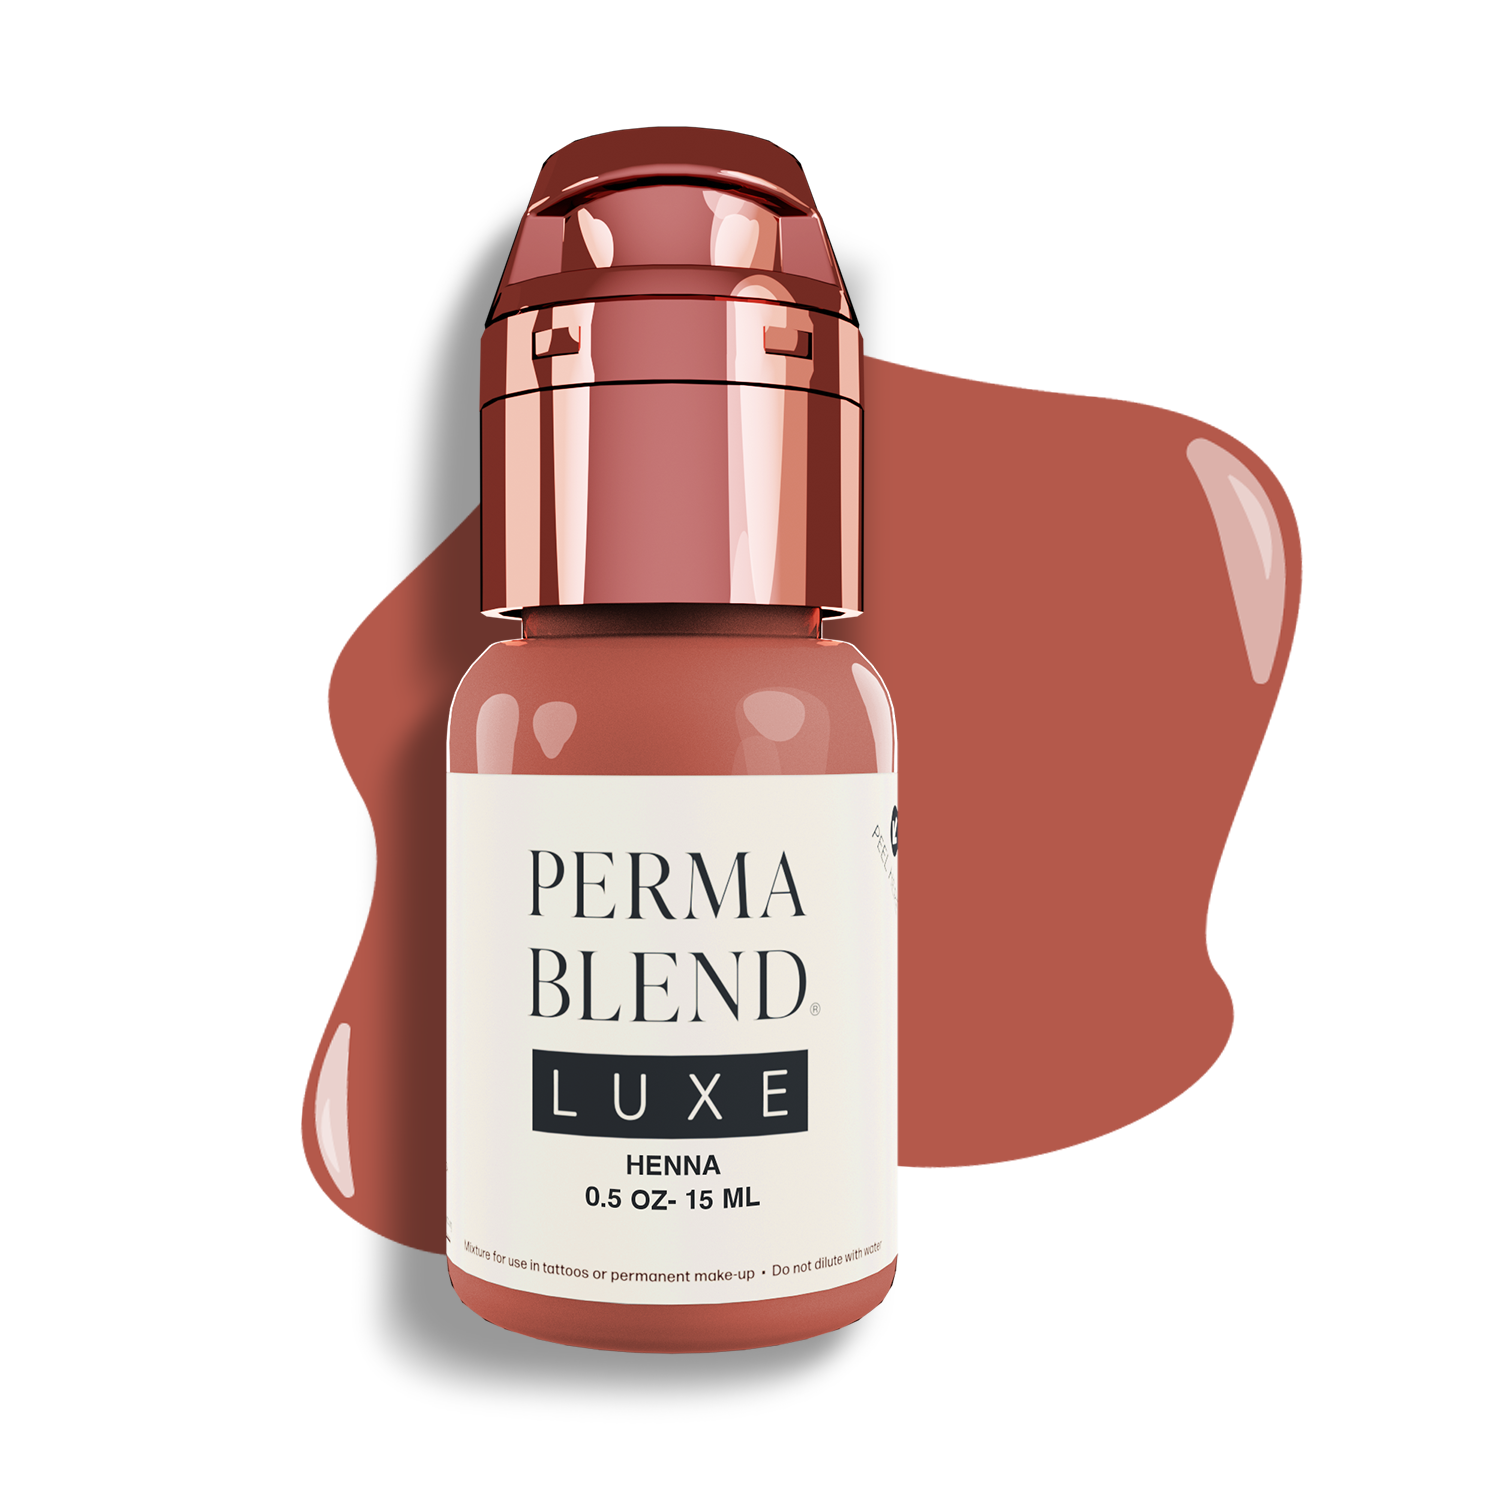 Perma Blend Luxe PMU Ink | Henna | Lips